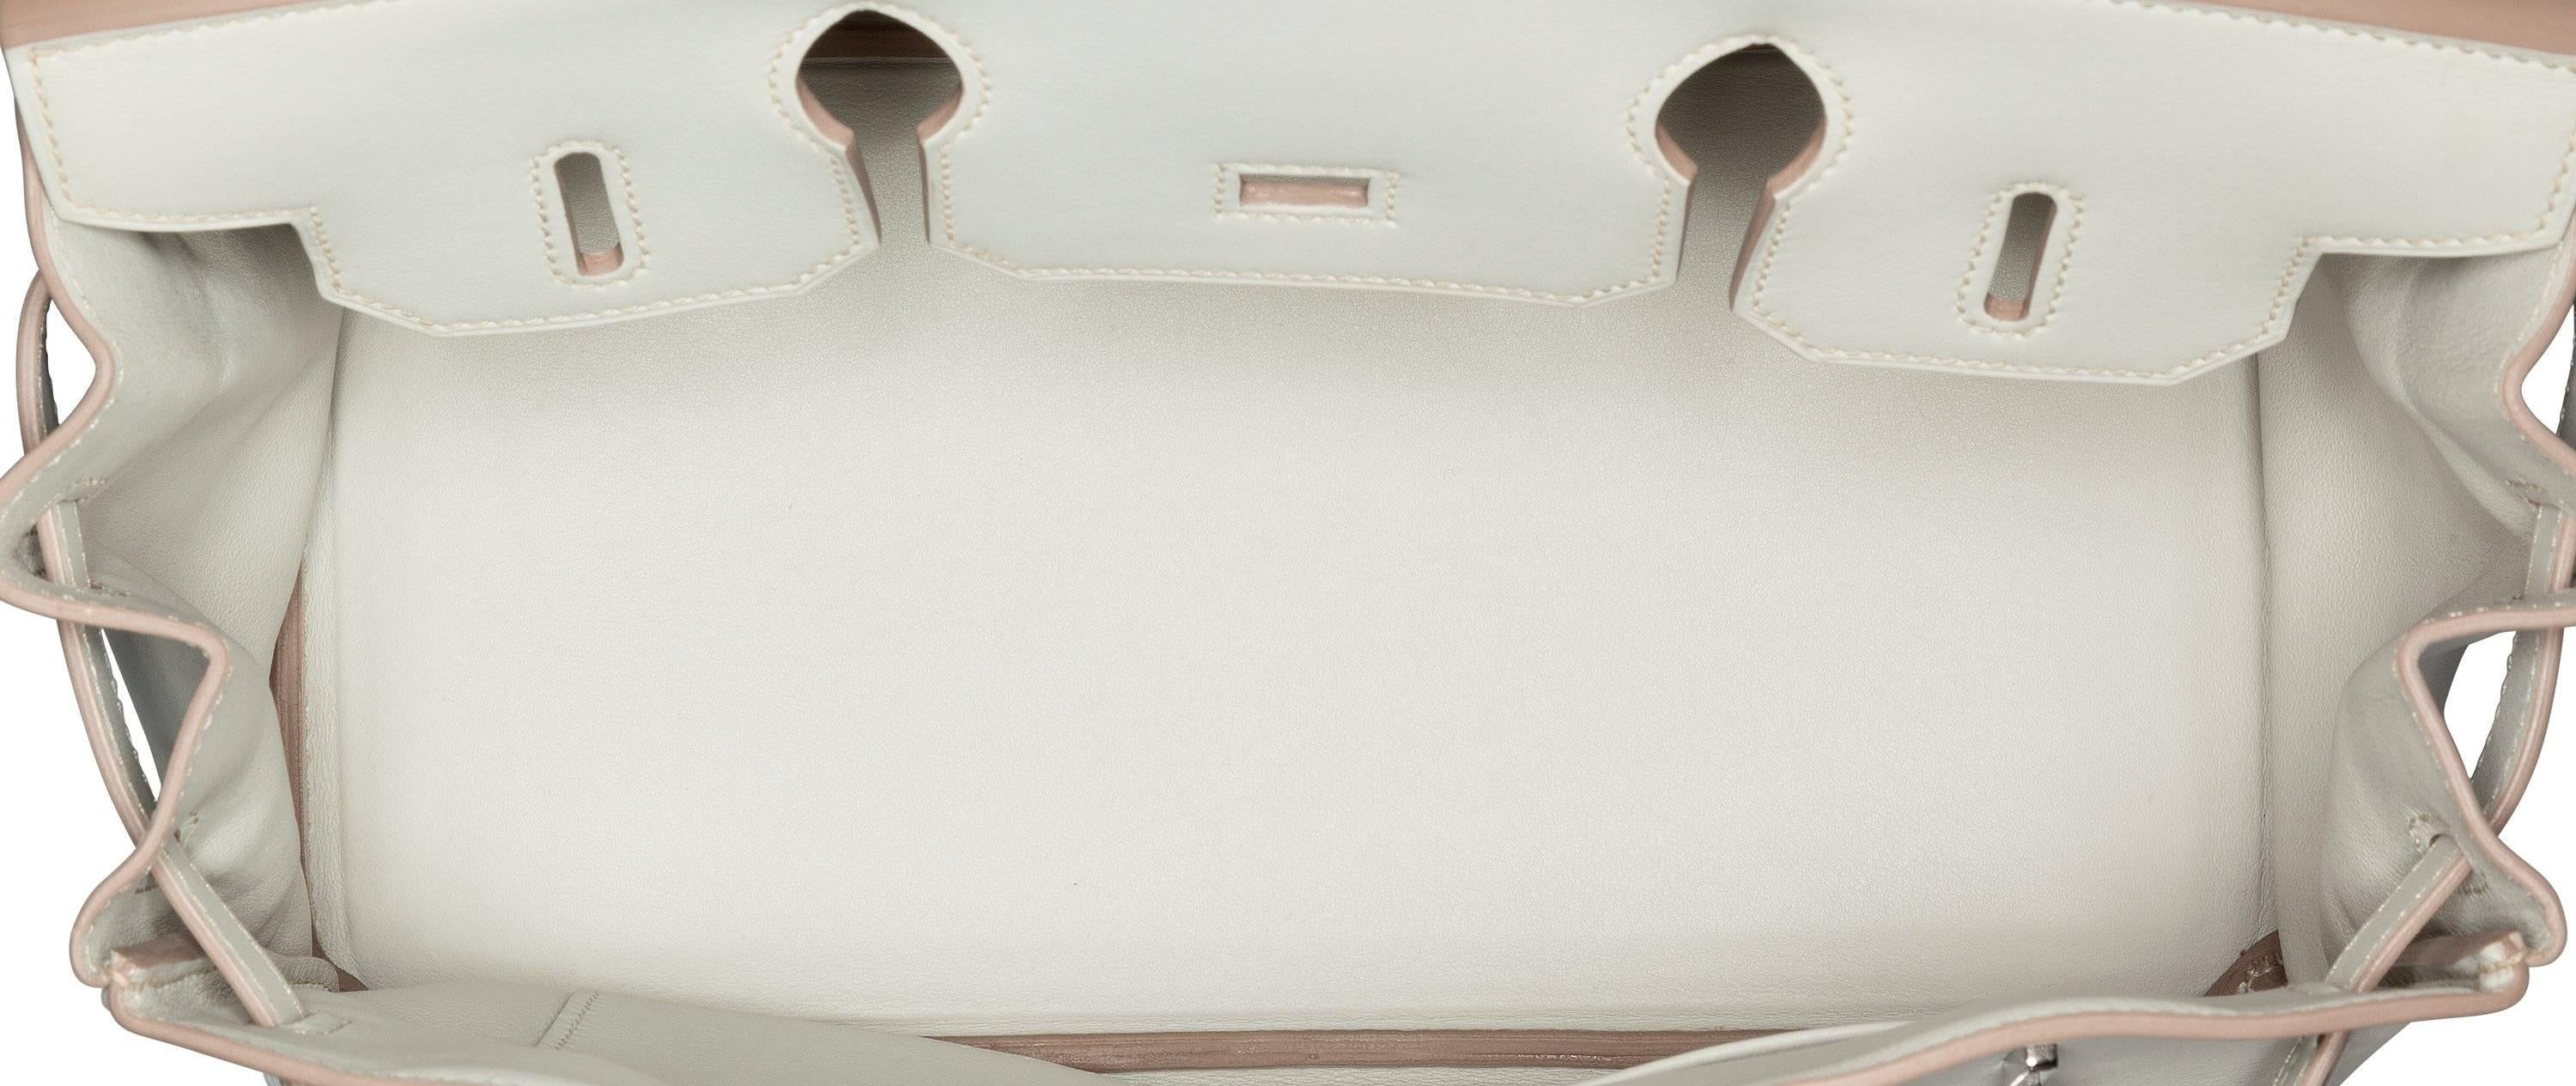 Beige Hermes 30cm Gris Perle Swift Leather Birkin Bag with Palladium Hardware For Sale